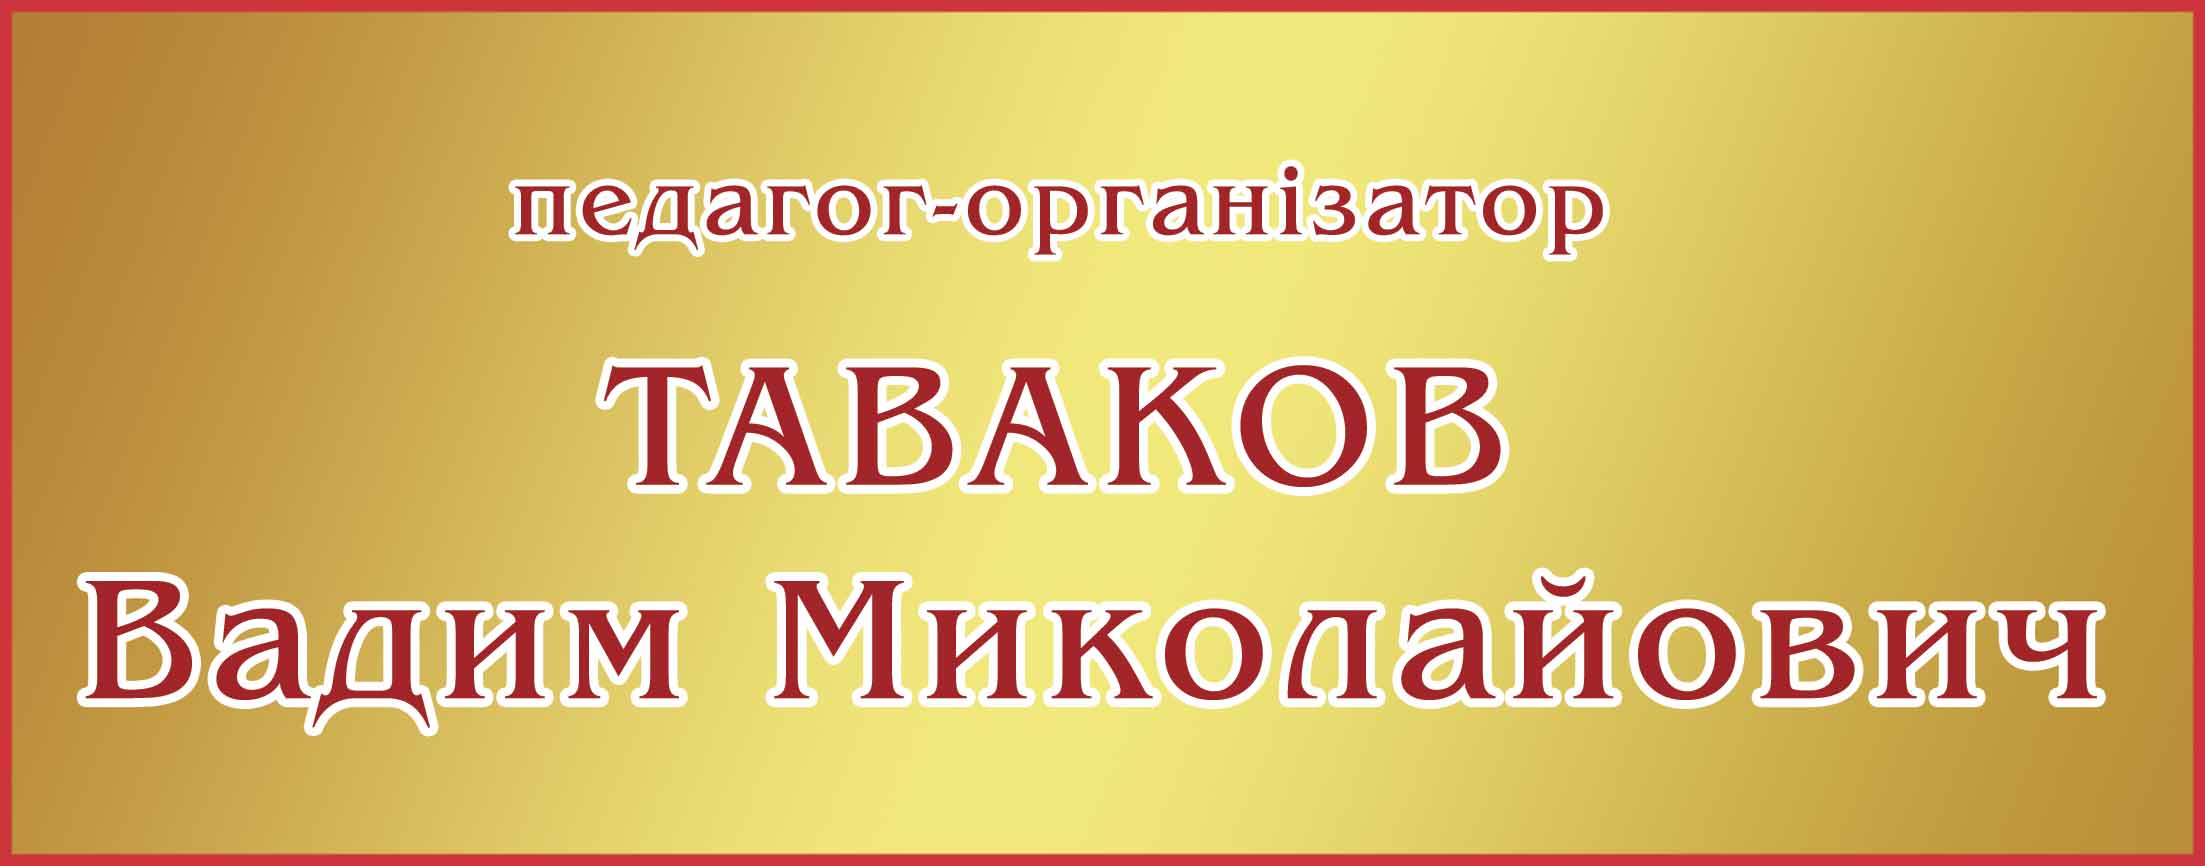 Табличка Педагог-организатор